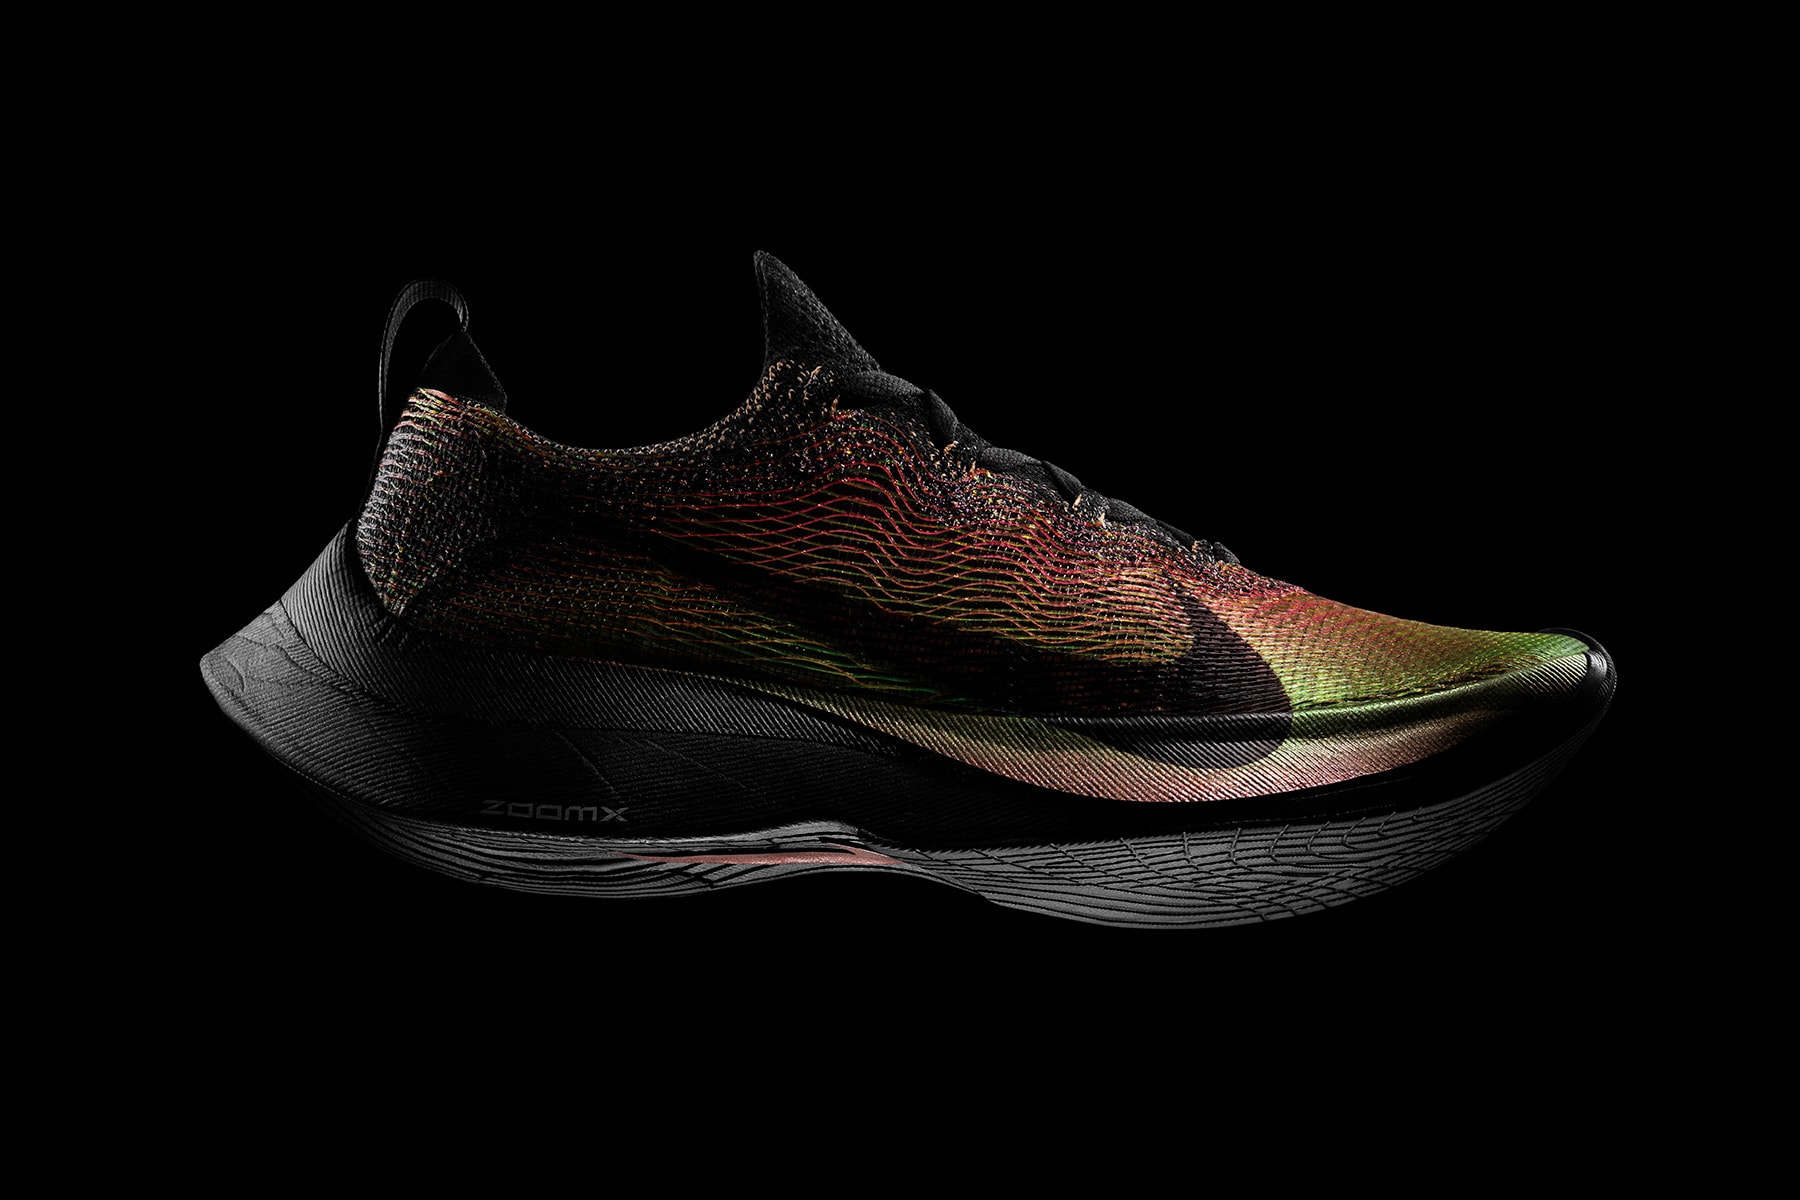 3Dプリント技術を用いた新作ランニングシューズ Nike Zoom VaporFly Elite Flyprint が誕生 ナイキ ズーム ヴェイパーフライ エリート フライプリント HYPEBEAST ハイプビースト